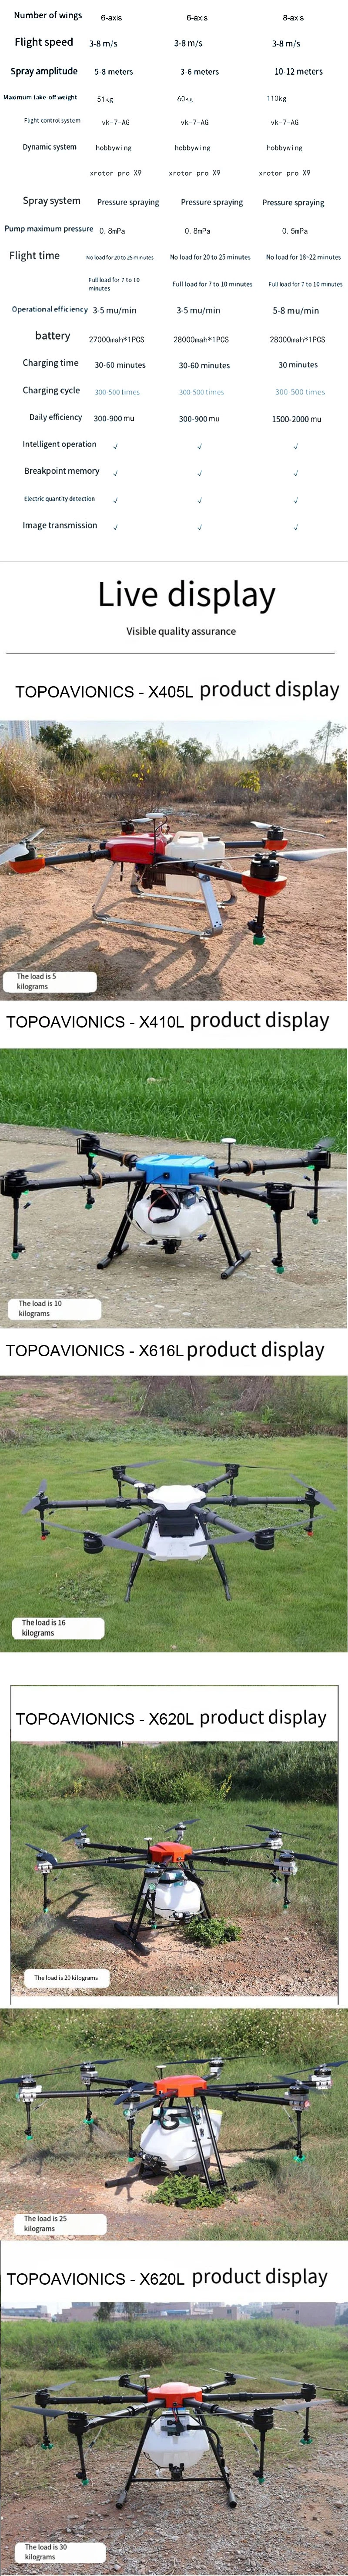 30L Drone Irrigation Waterproof Long Flight Time Spreading Fumigation Drones Frame Pesticide Sprayer Uav 30 Liter